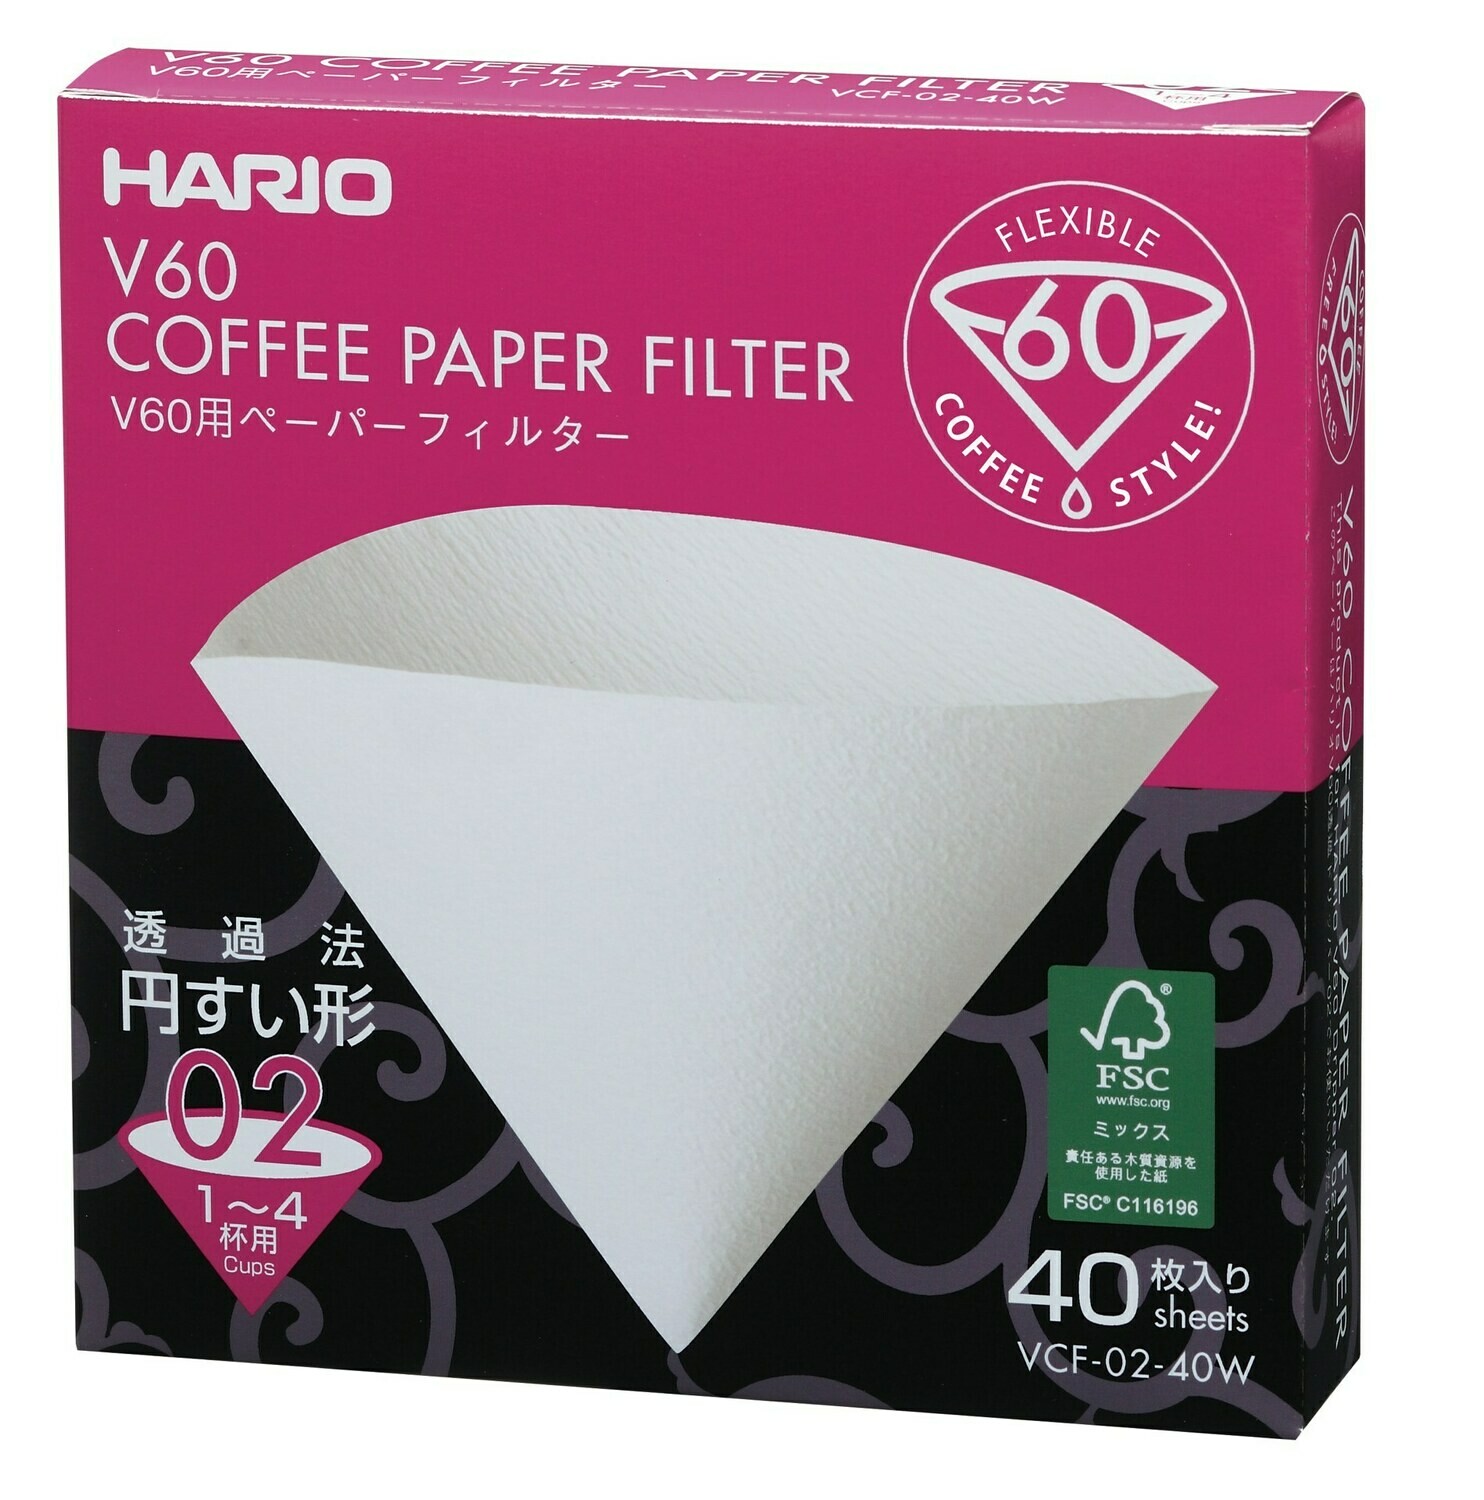 Hario V60 Paper Filter White 02, 40ct box